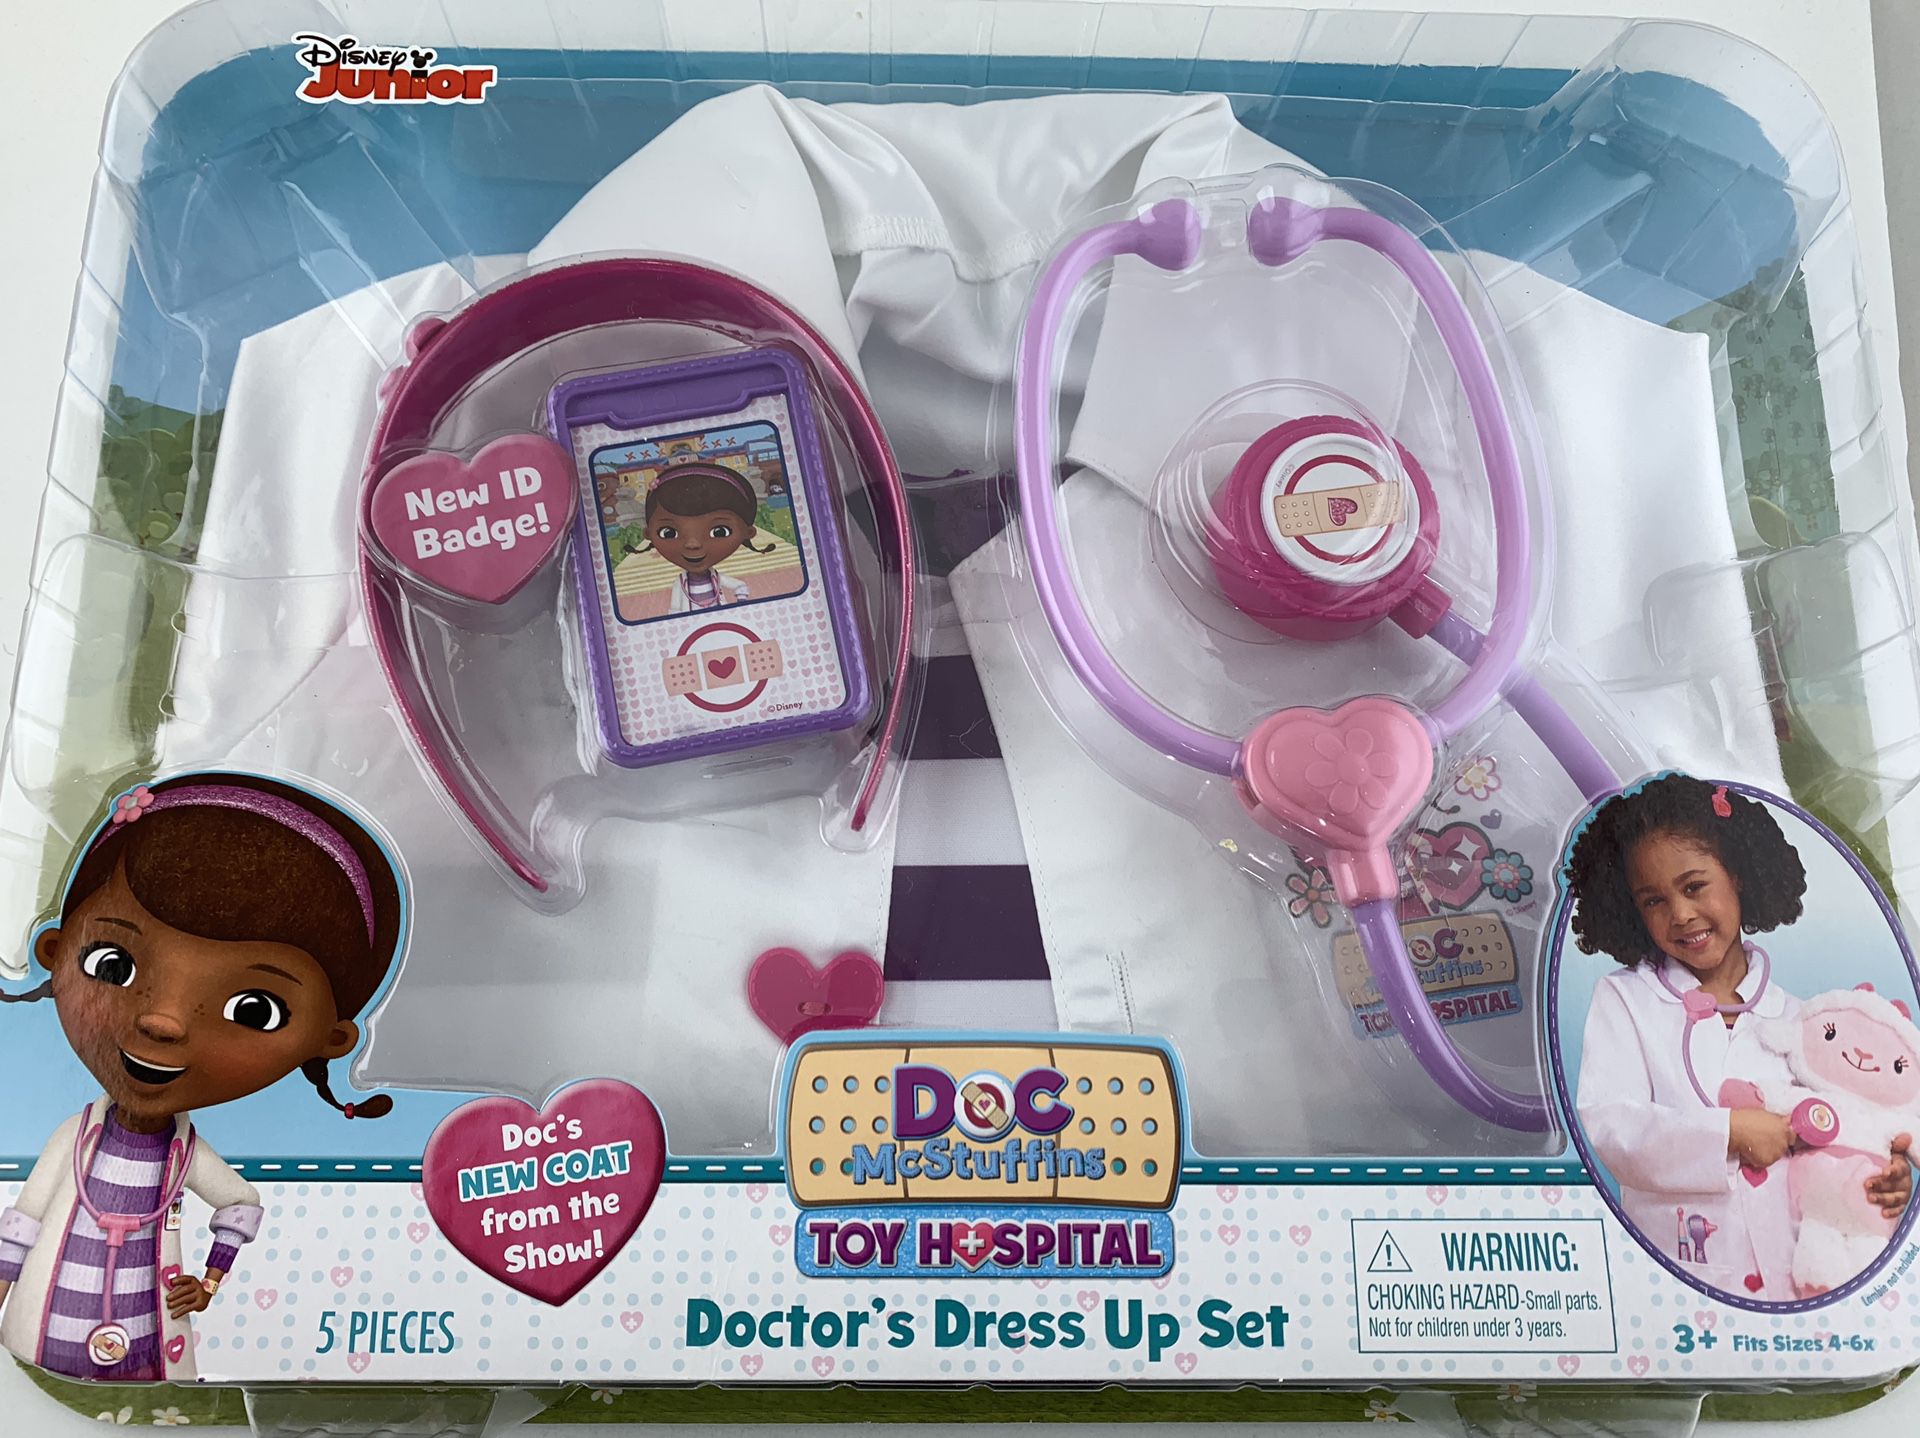 NEW Disney Doc McStuffins Doctor’s Dress Up Set Costume New 5 Pieces Size 4-6X New